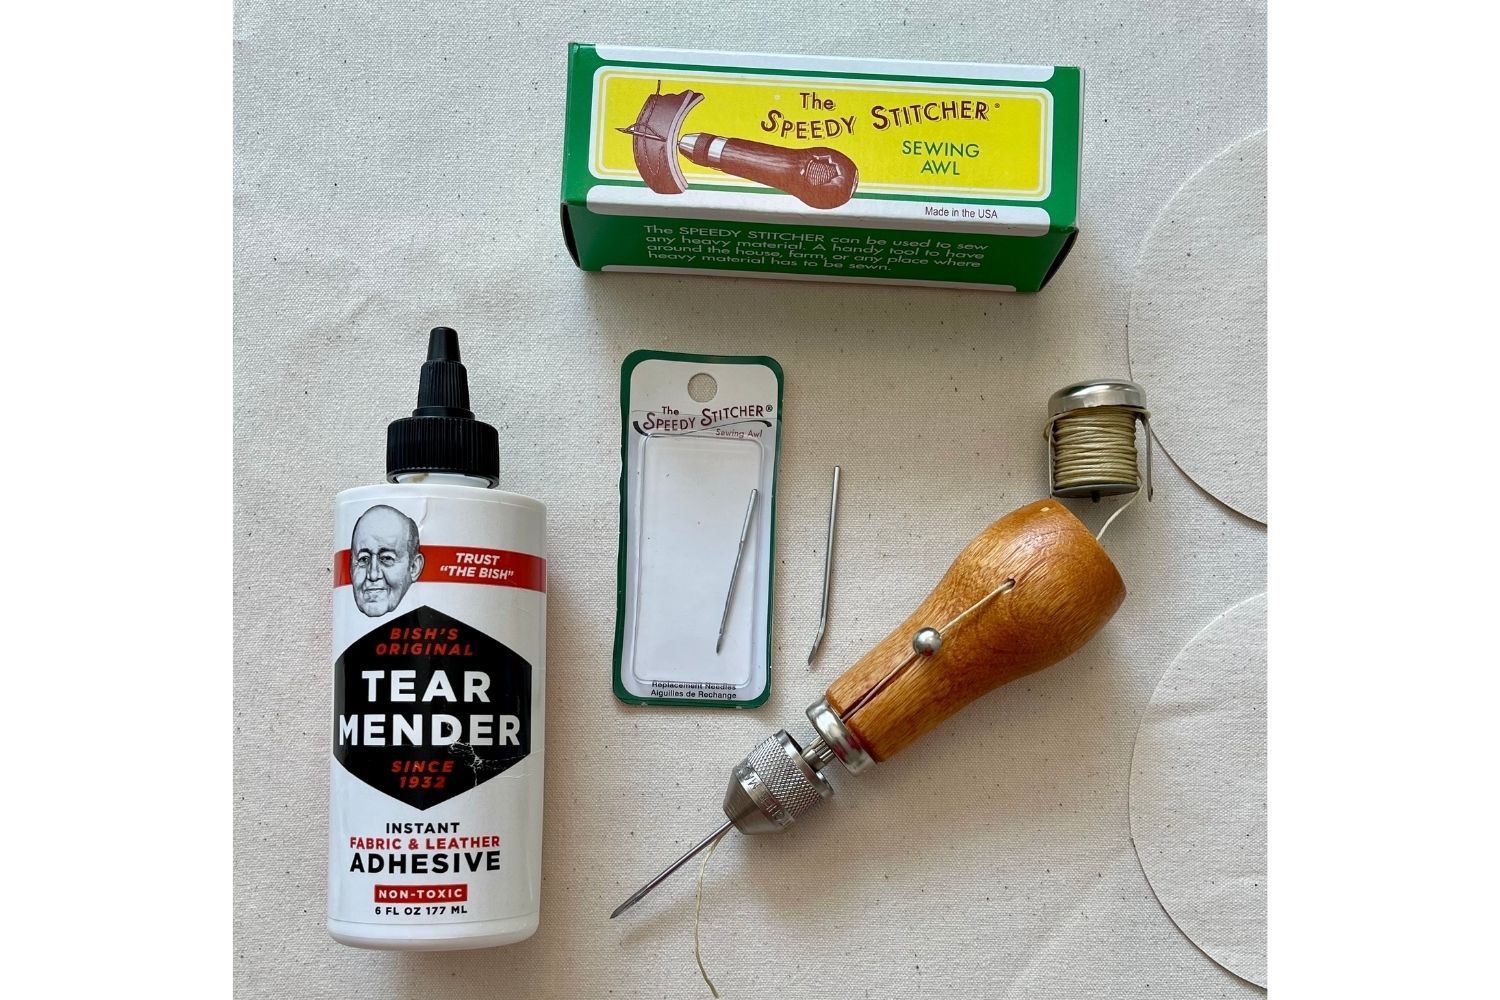  105 Pieces Zipper Repair Kit #3#5#8, Zipper